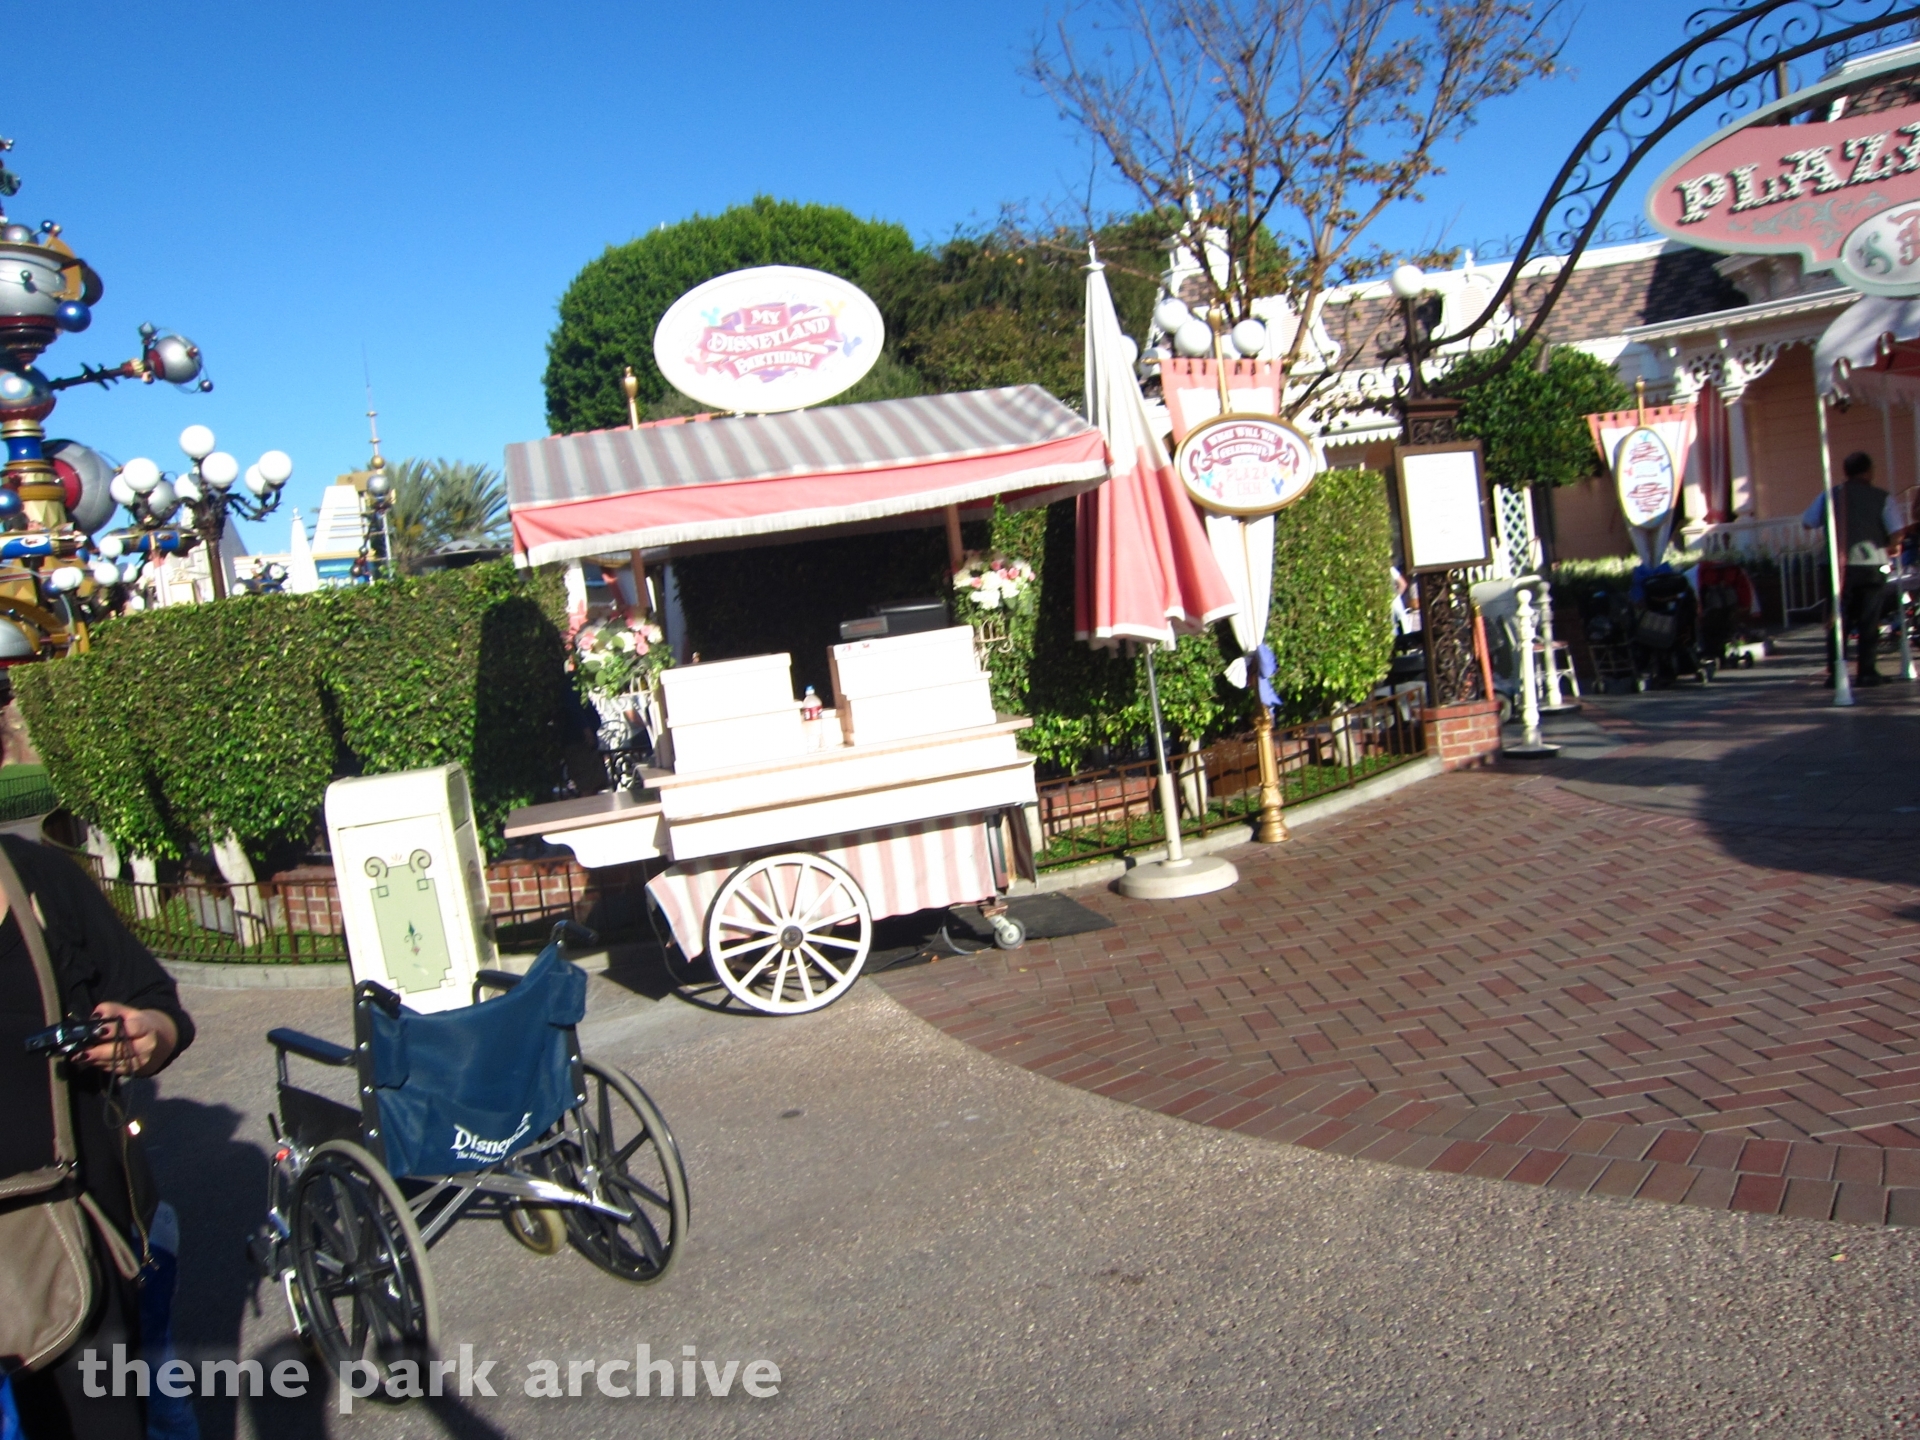 Plaza Inn at Disneyland | Theme Park Archive